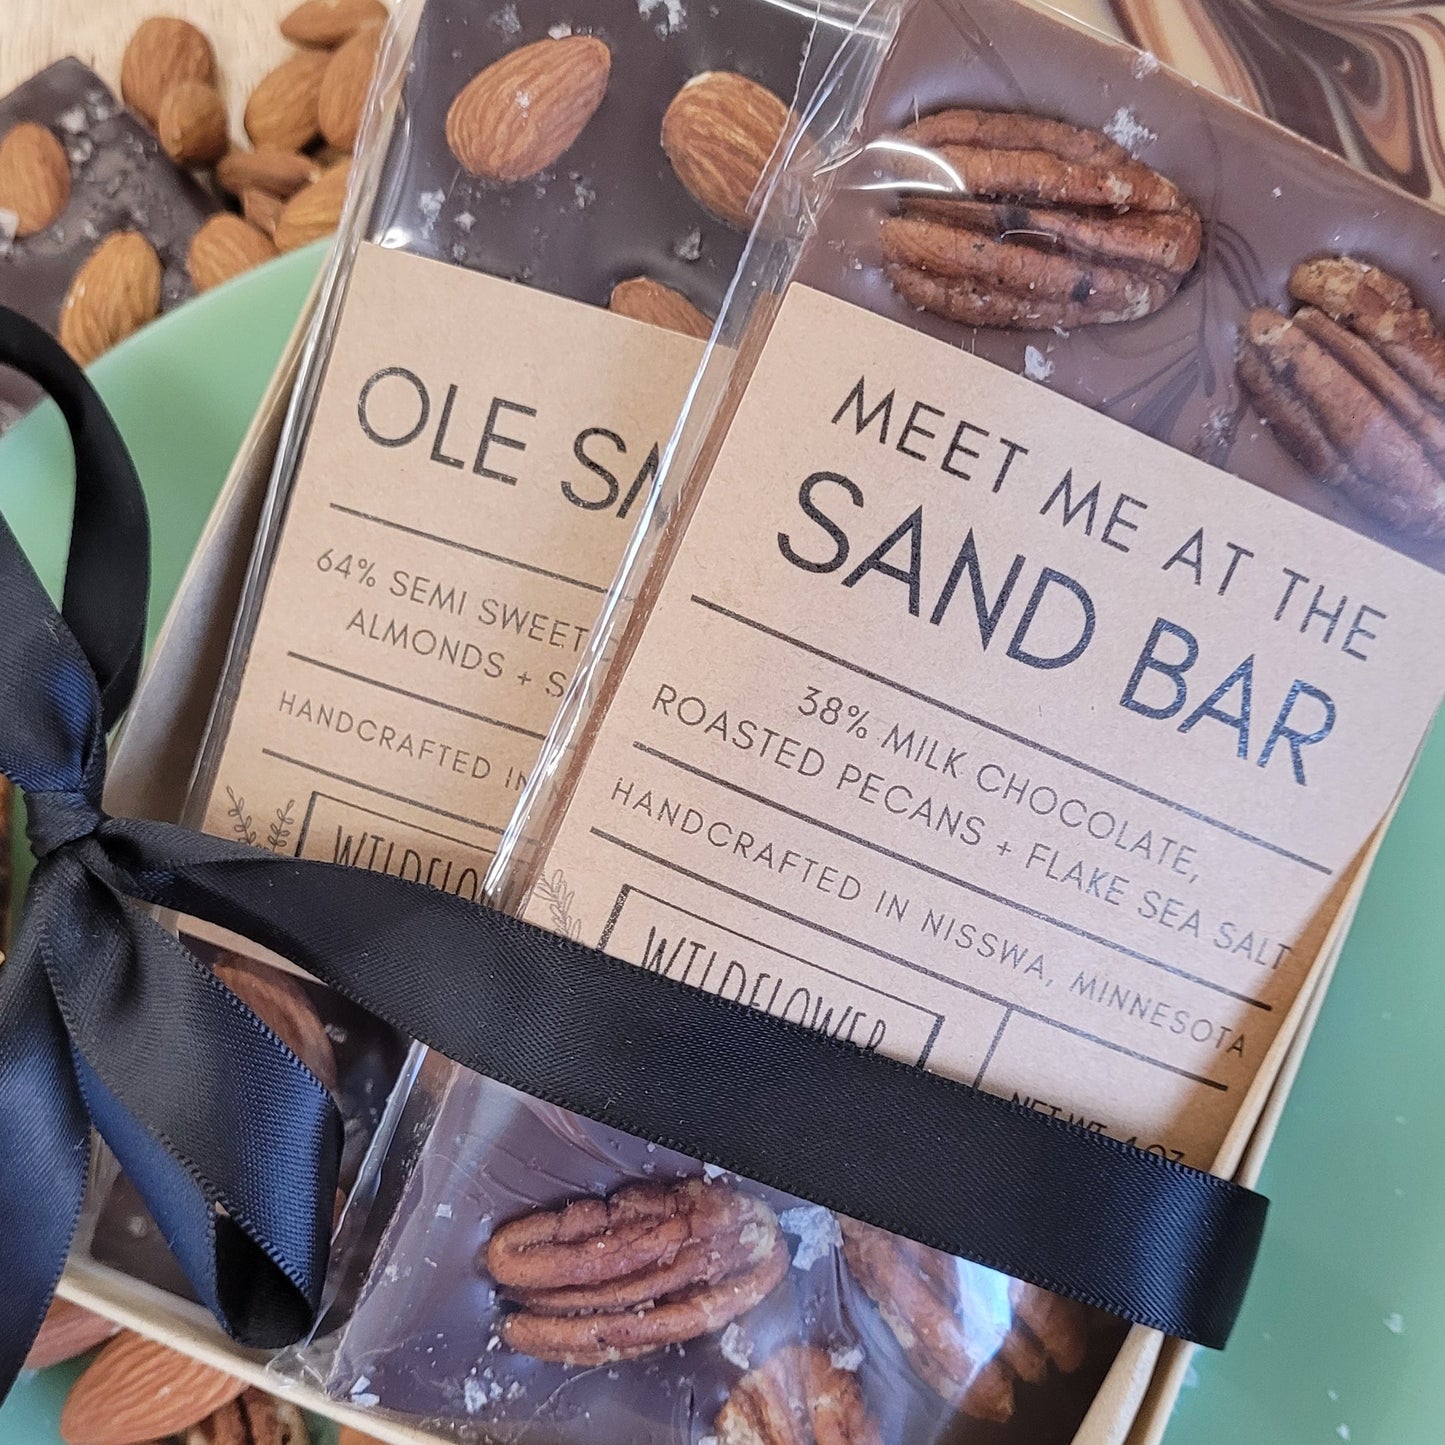 Meet Me at the Sand Bar - 38% Milk Chocolate